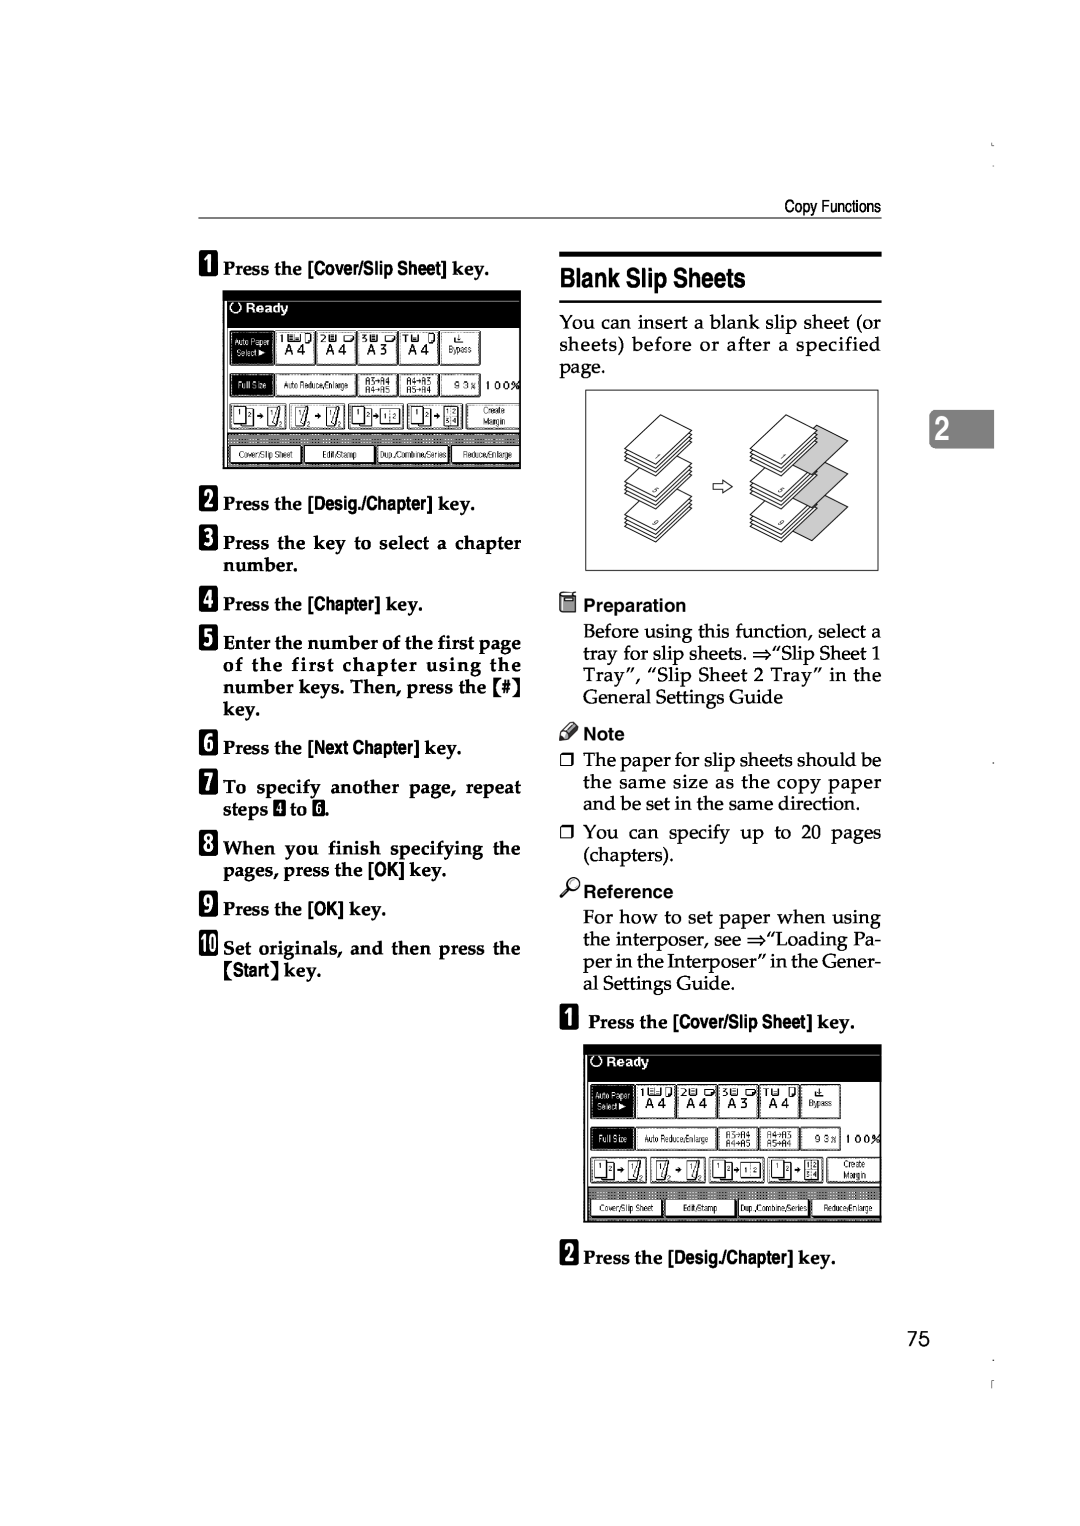 Lanier LD060 Blank Slip Sheets, A Press the Cover/Slip Sheet key B Press the Desig./Chapter key, Start key, Preparation 